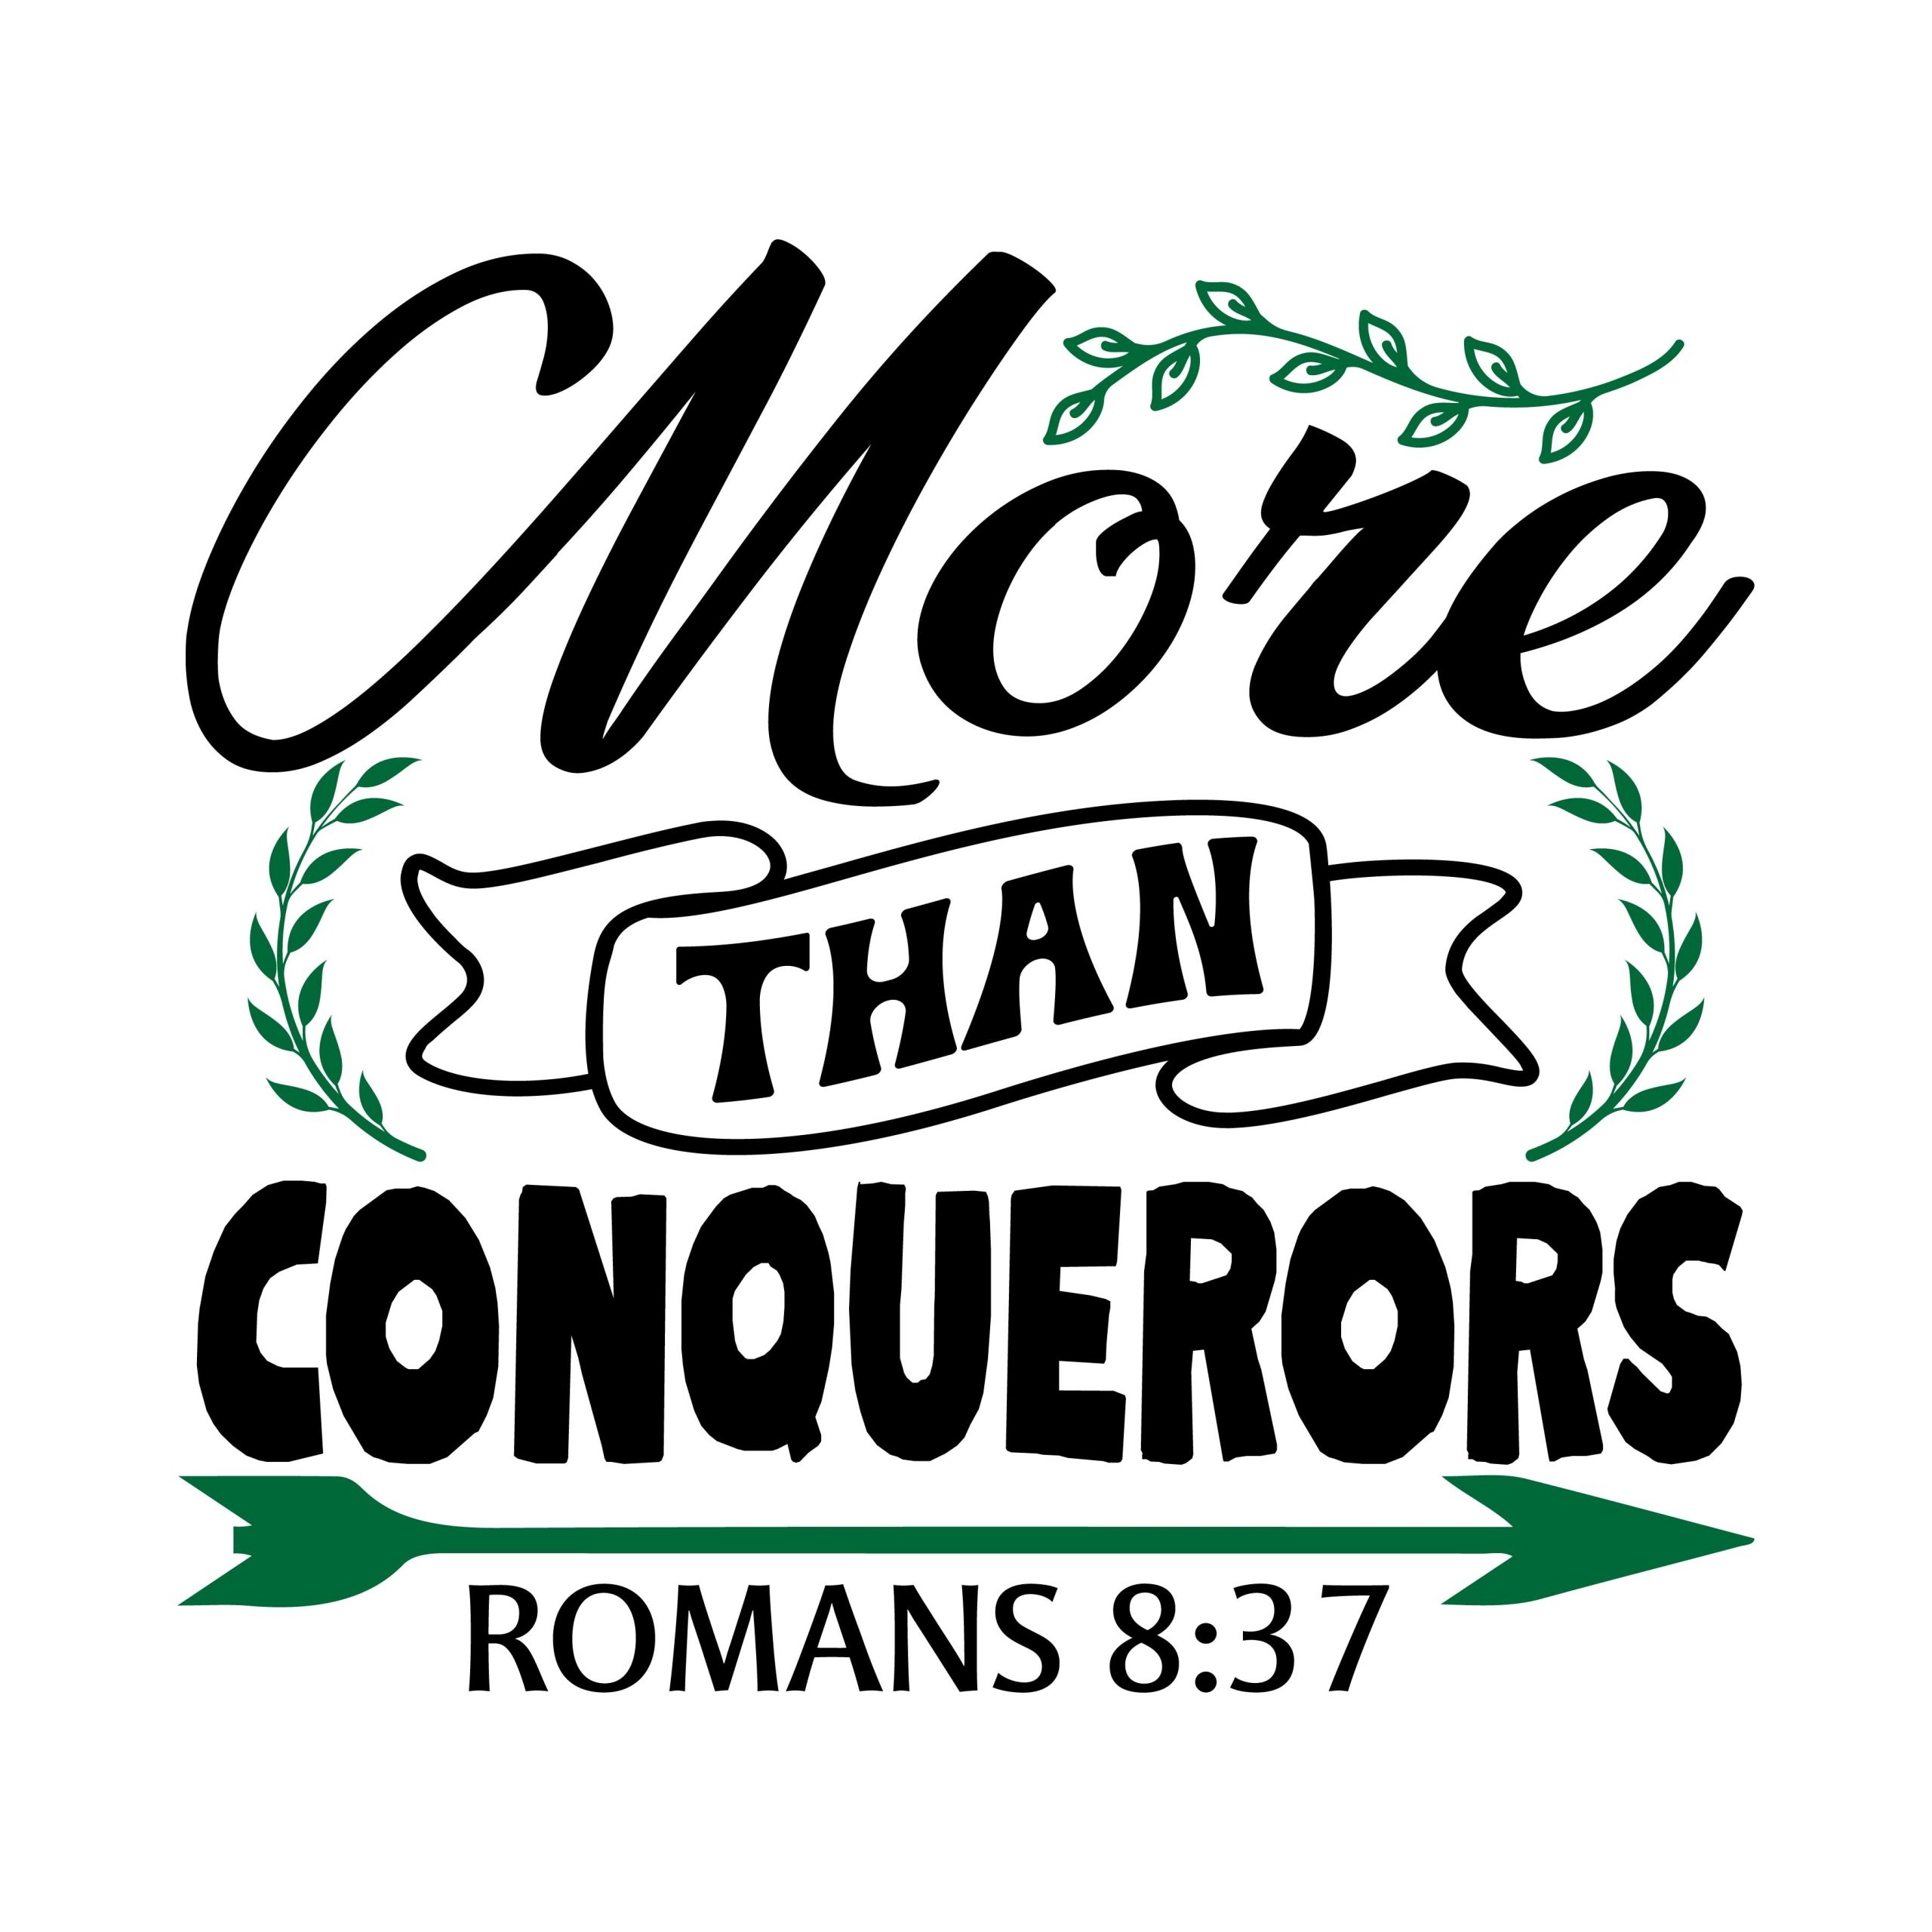 More than conquerors romans 8:37, bible verses, scripture verses, svg files, passages, sayings, cricut designs, silhouette, embroidery, bundle, free cut files, design space, vector